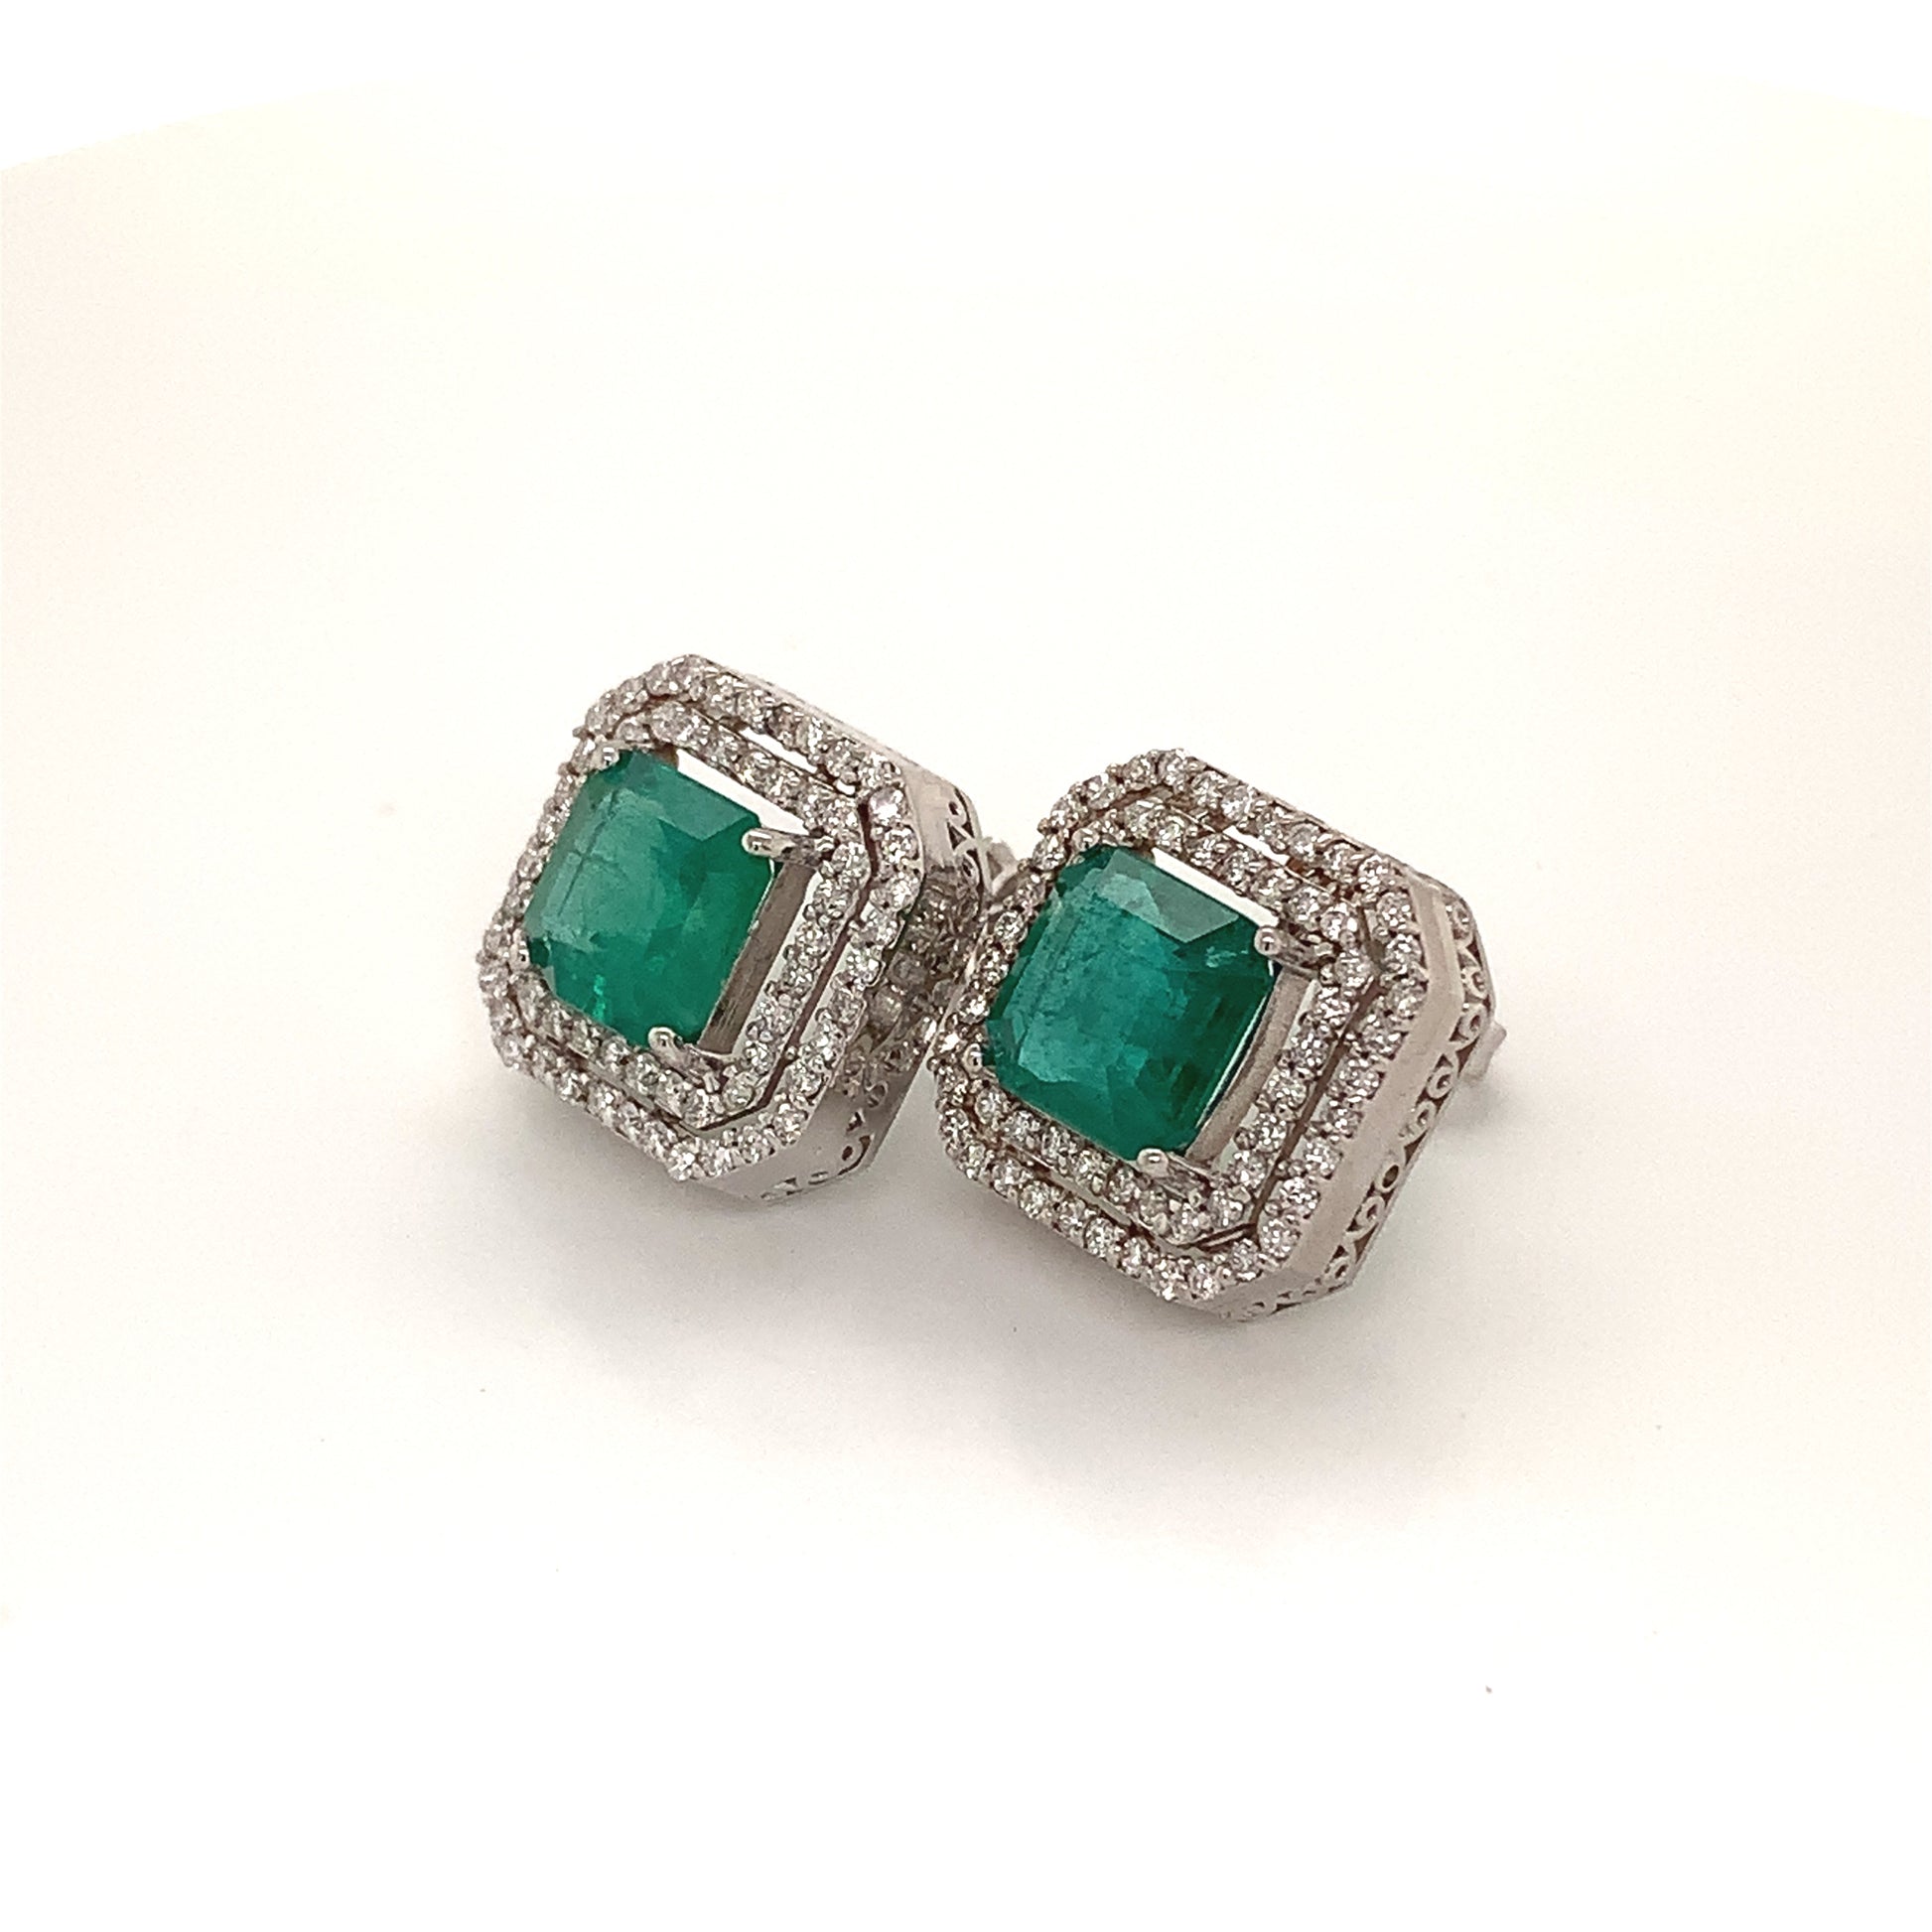 Natural Emerald Diamond Earrings 14k Gold 4.72 TCW Certified $8,950 113440